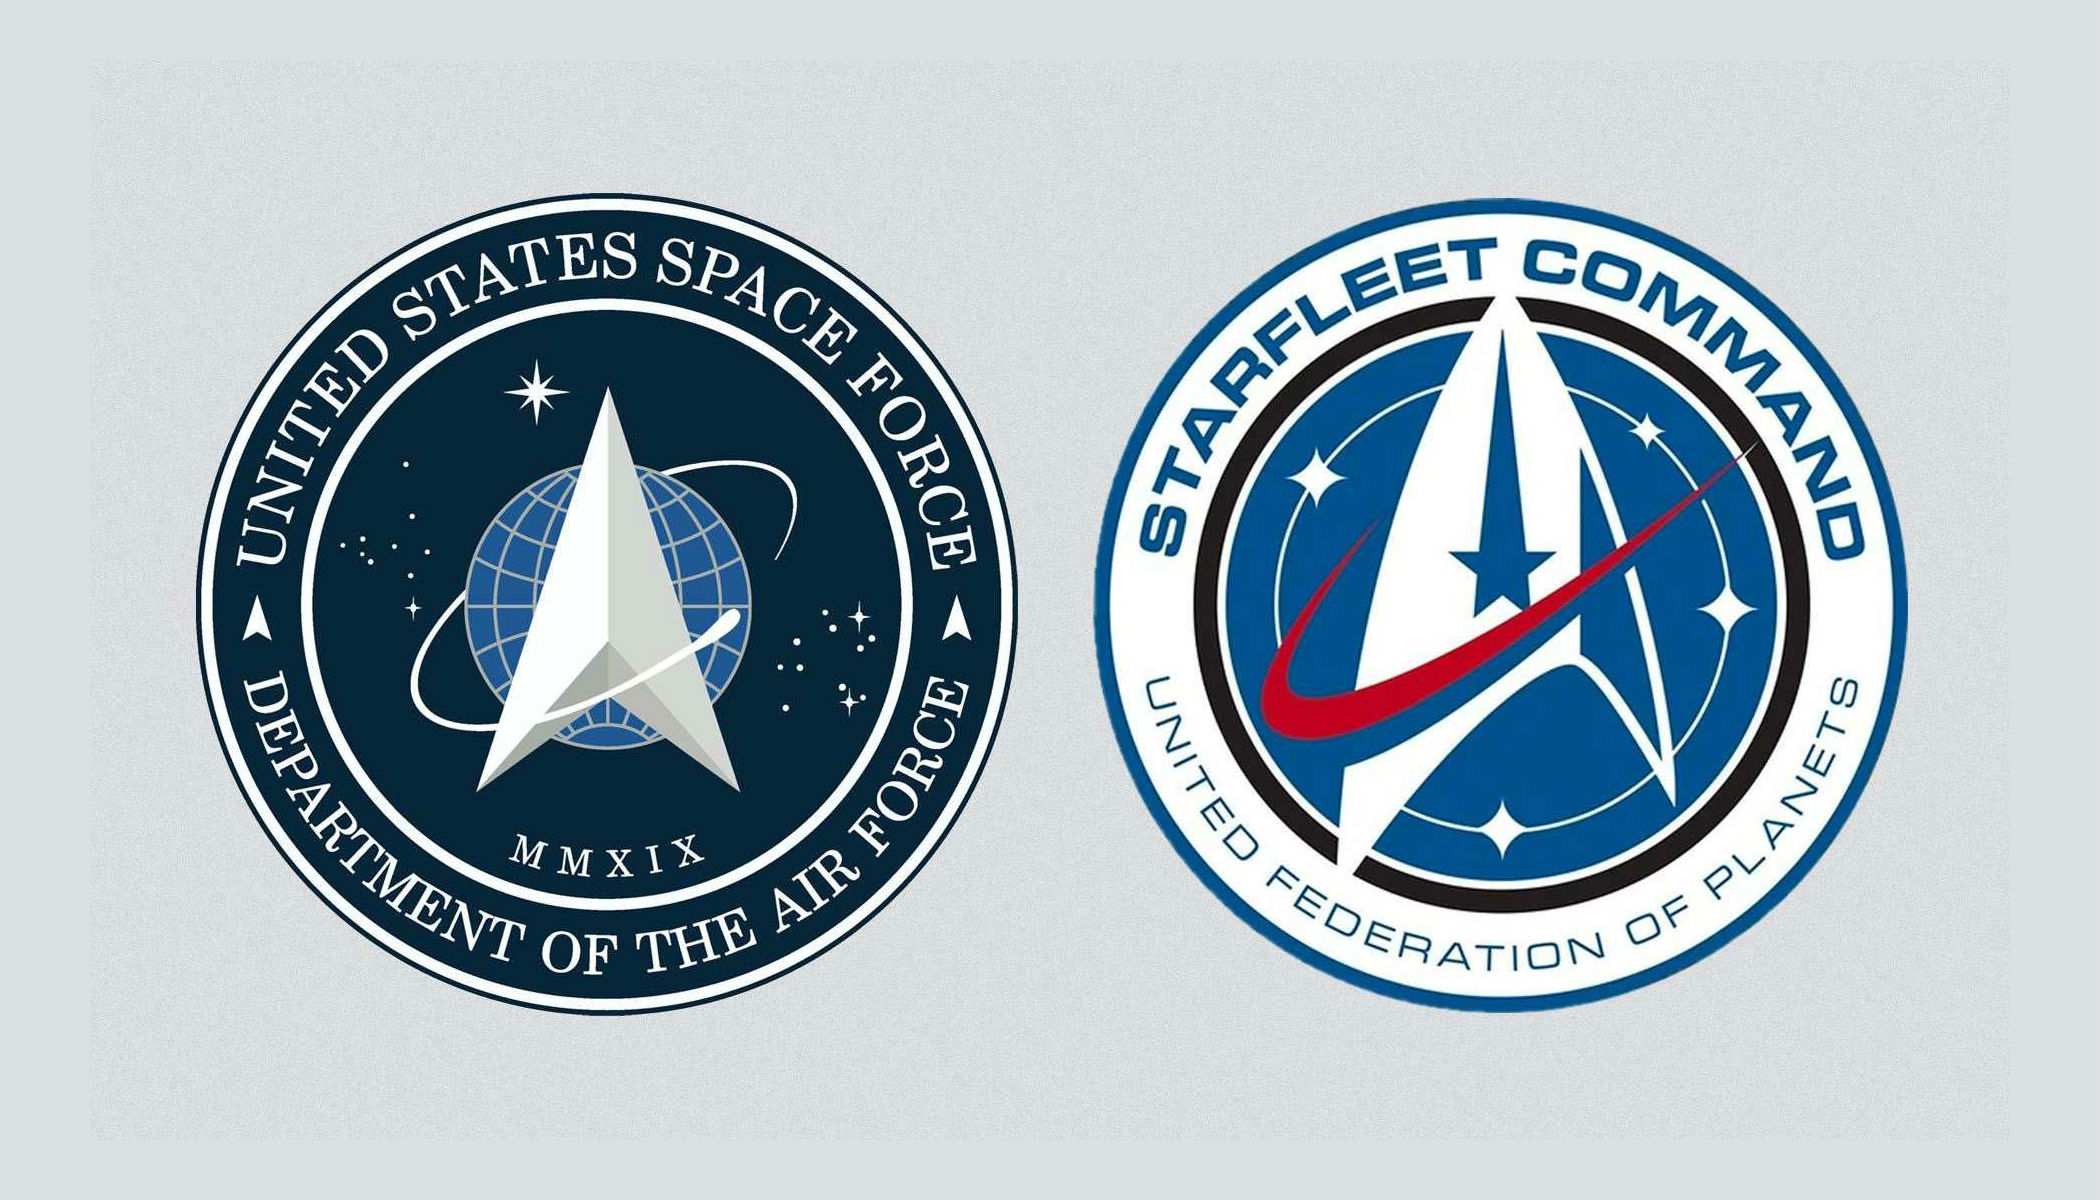 Trump NASA Military American Vinyl Black Round United States Space Force Seal Sticker 